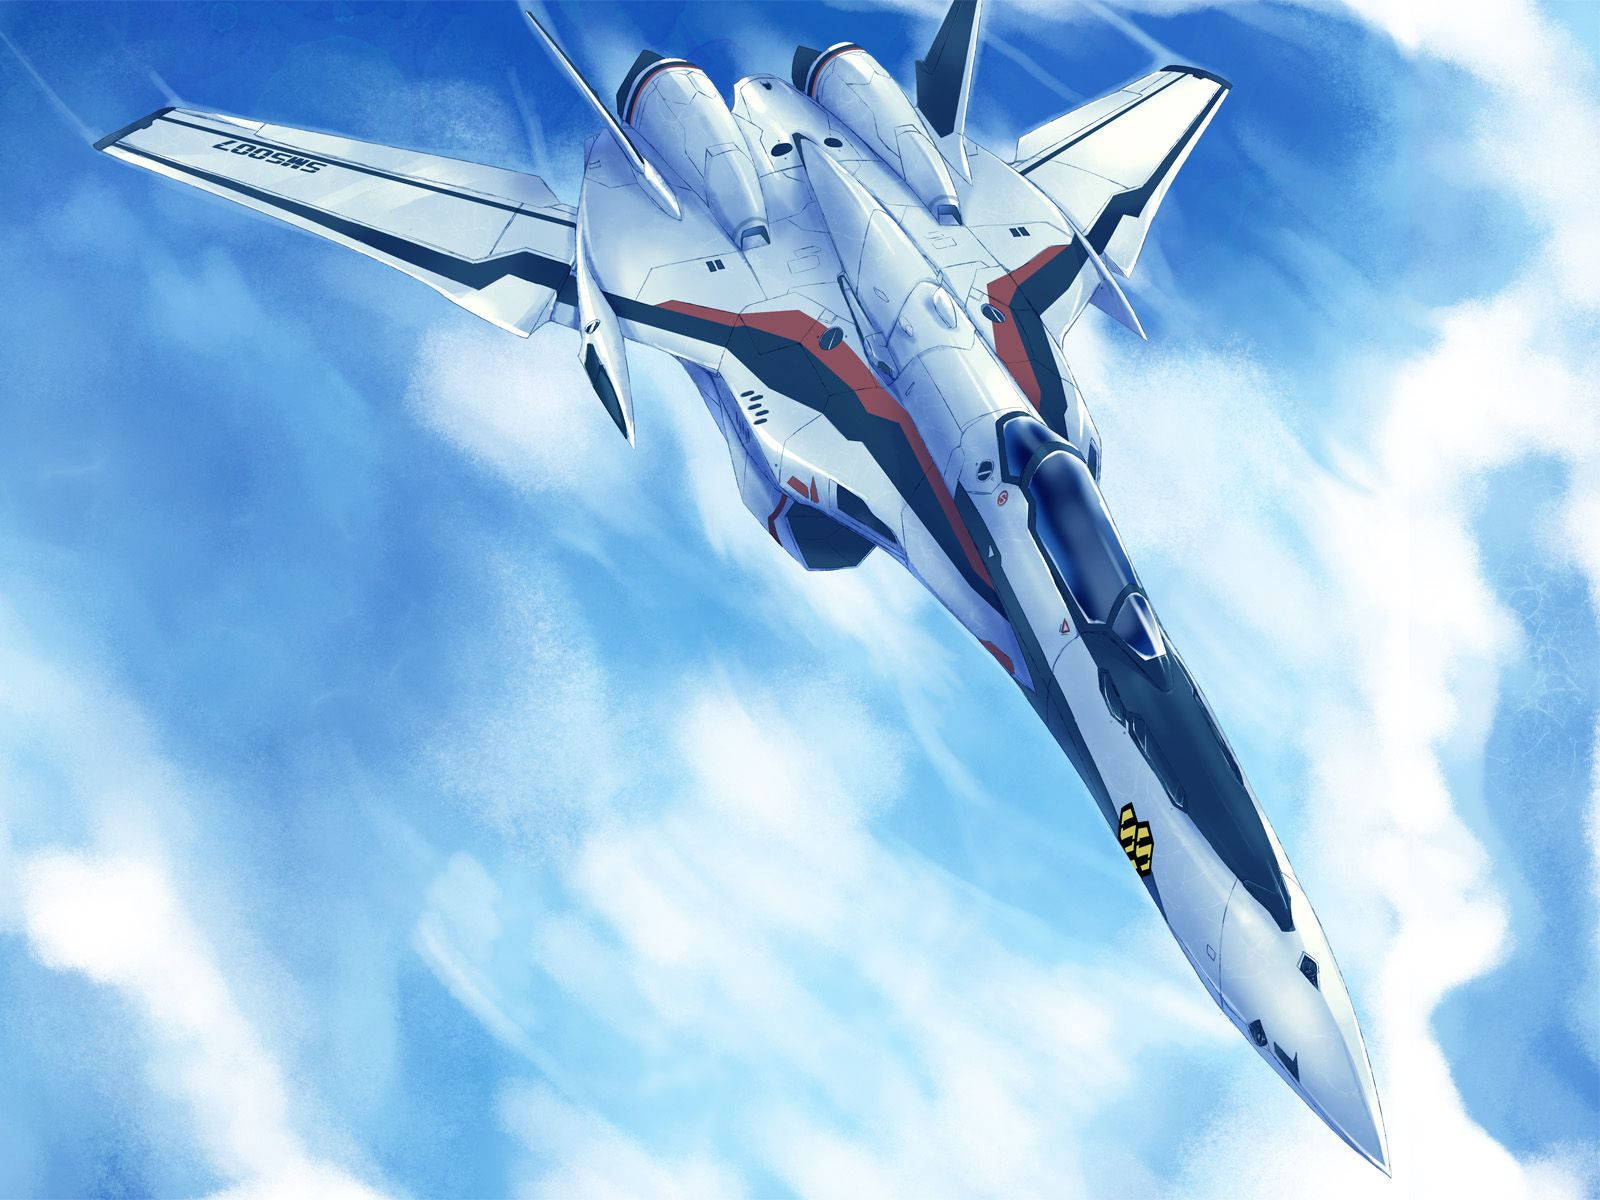 White Macross Aircraft Background